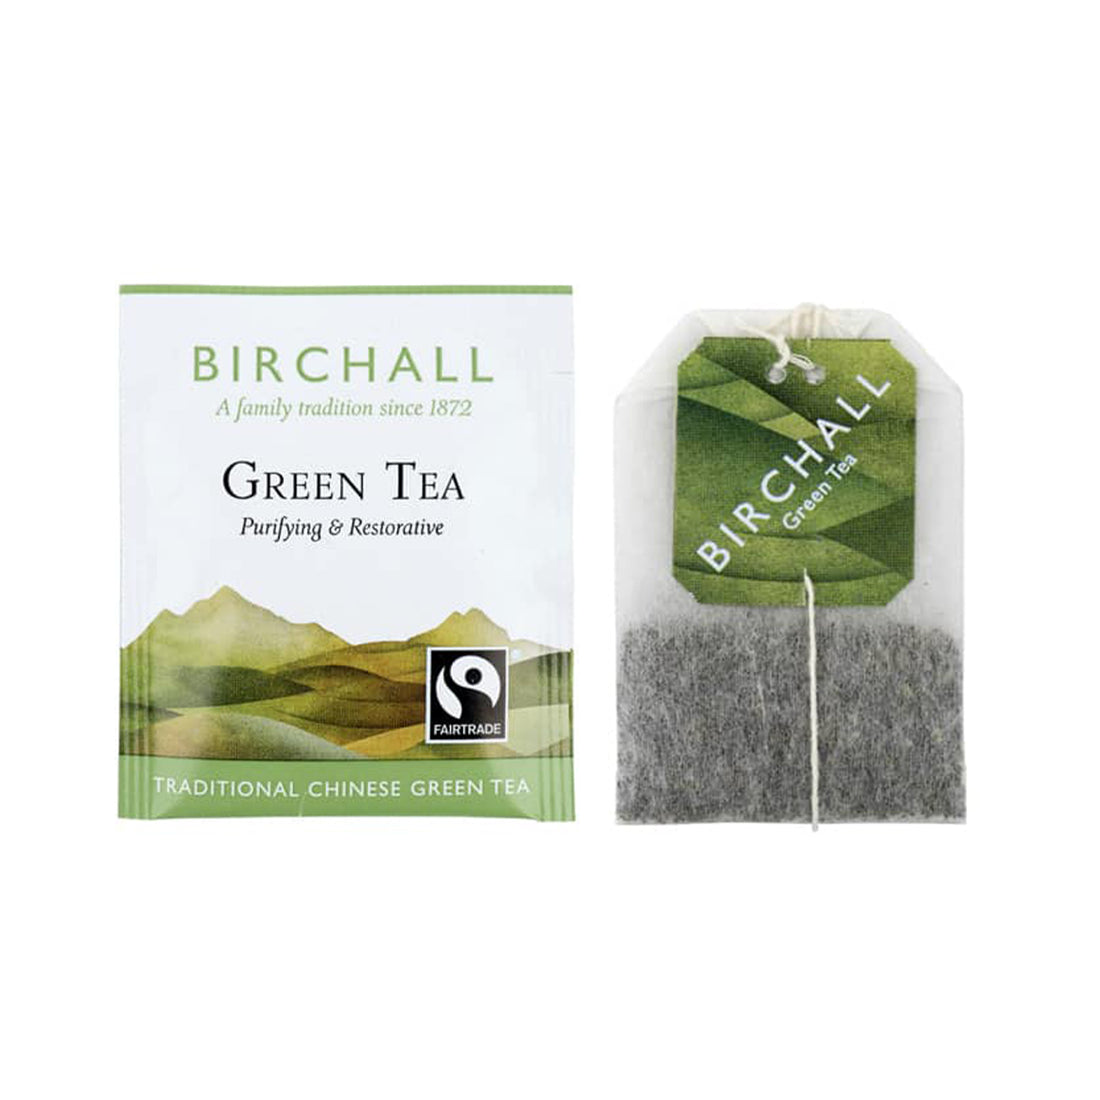 Birchall, Birchall Enveloped Tea Bags 25pcs - Green Tea, Redber Coffee